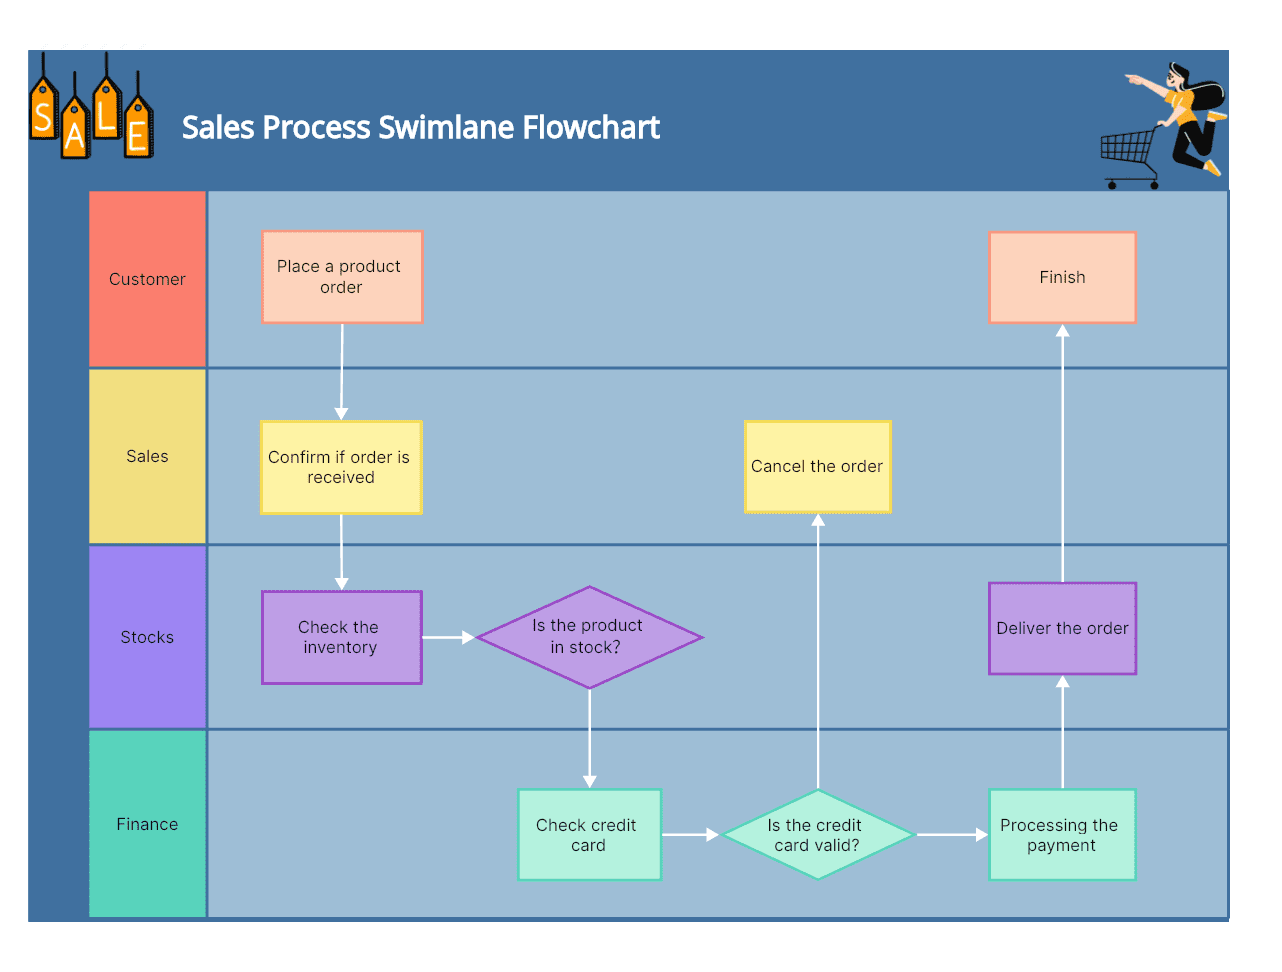 11. Sales order fulfillment flowchart